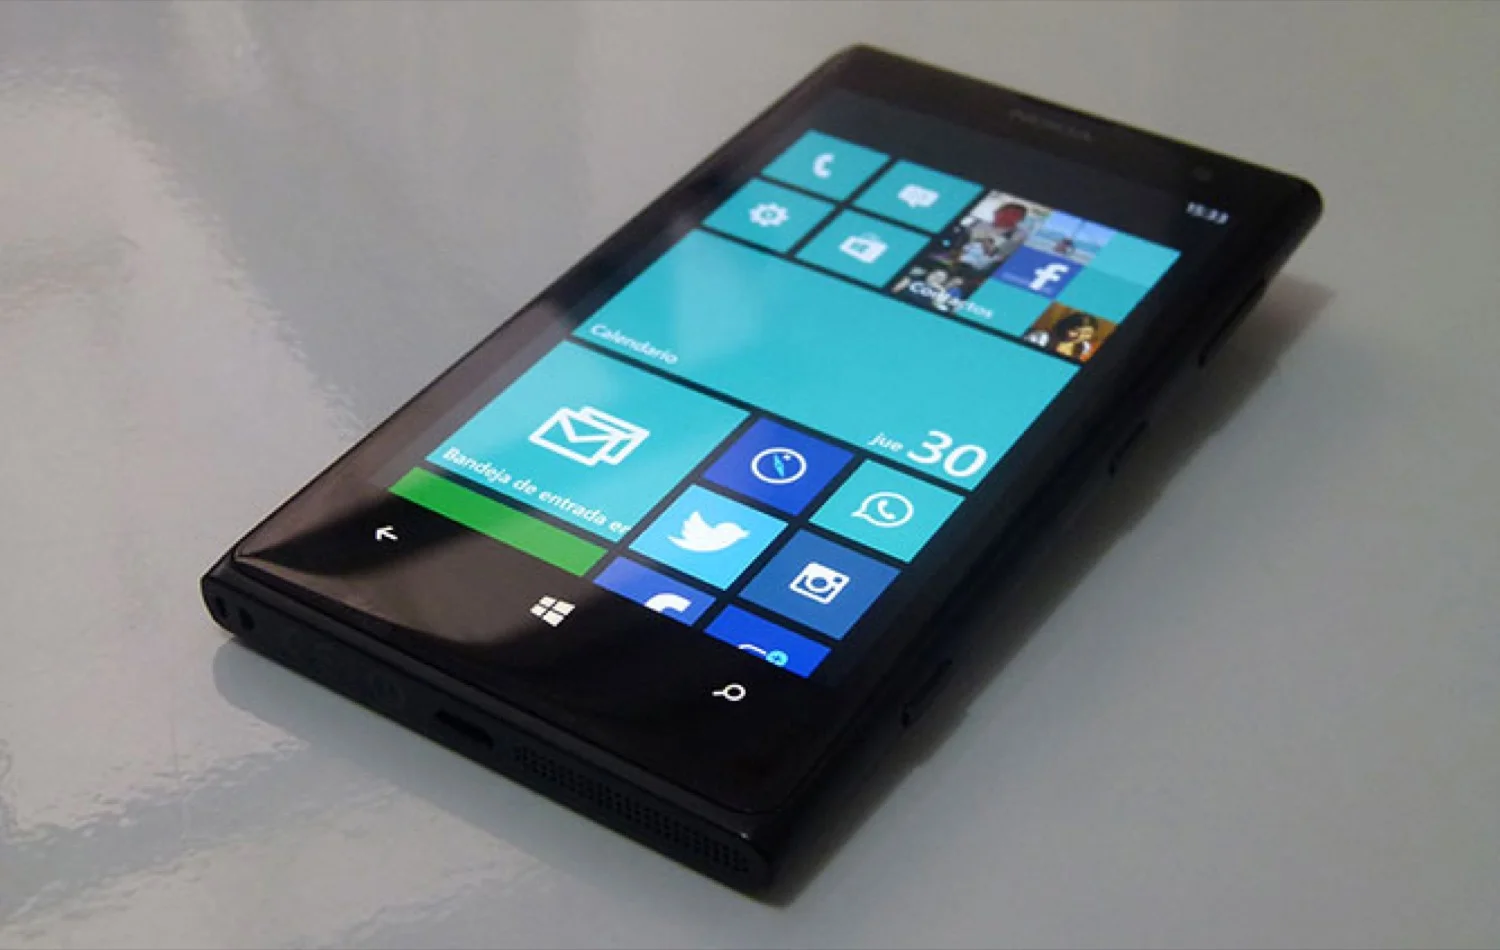 Review del smartphone Nokia Lumia 1020